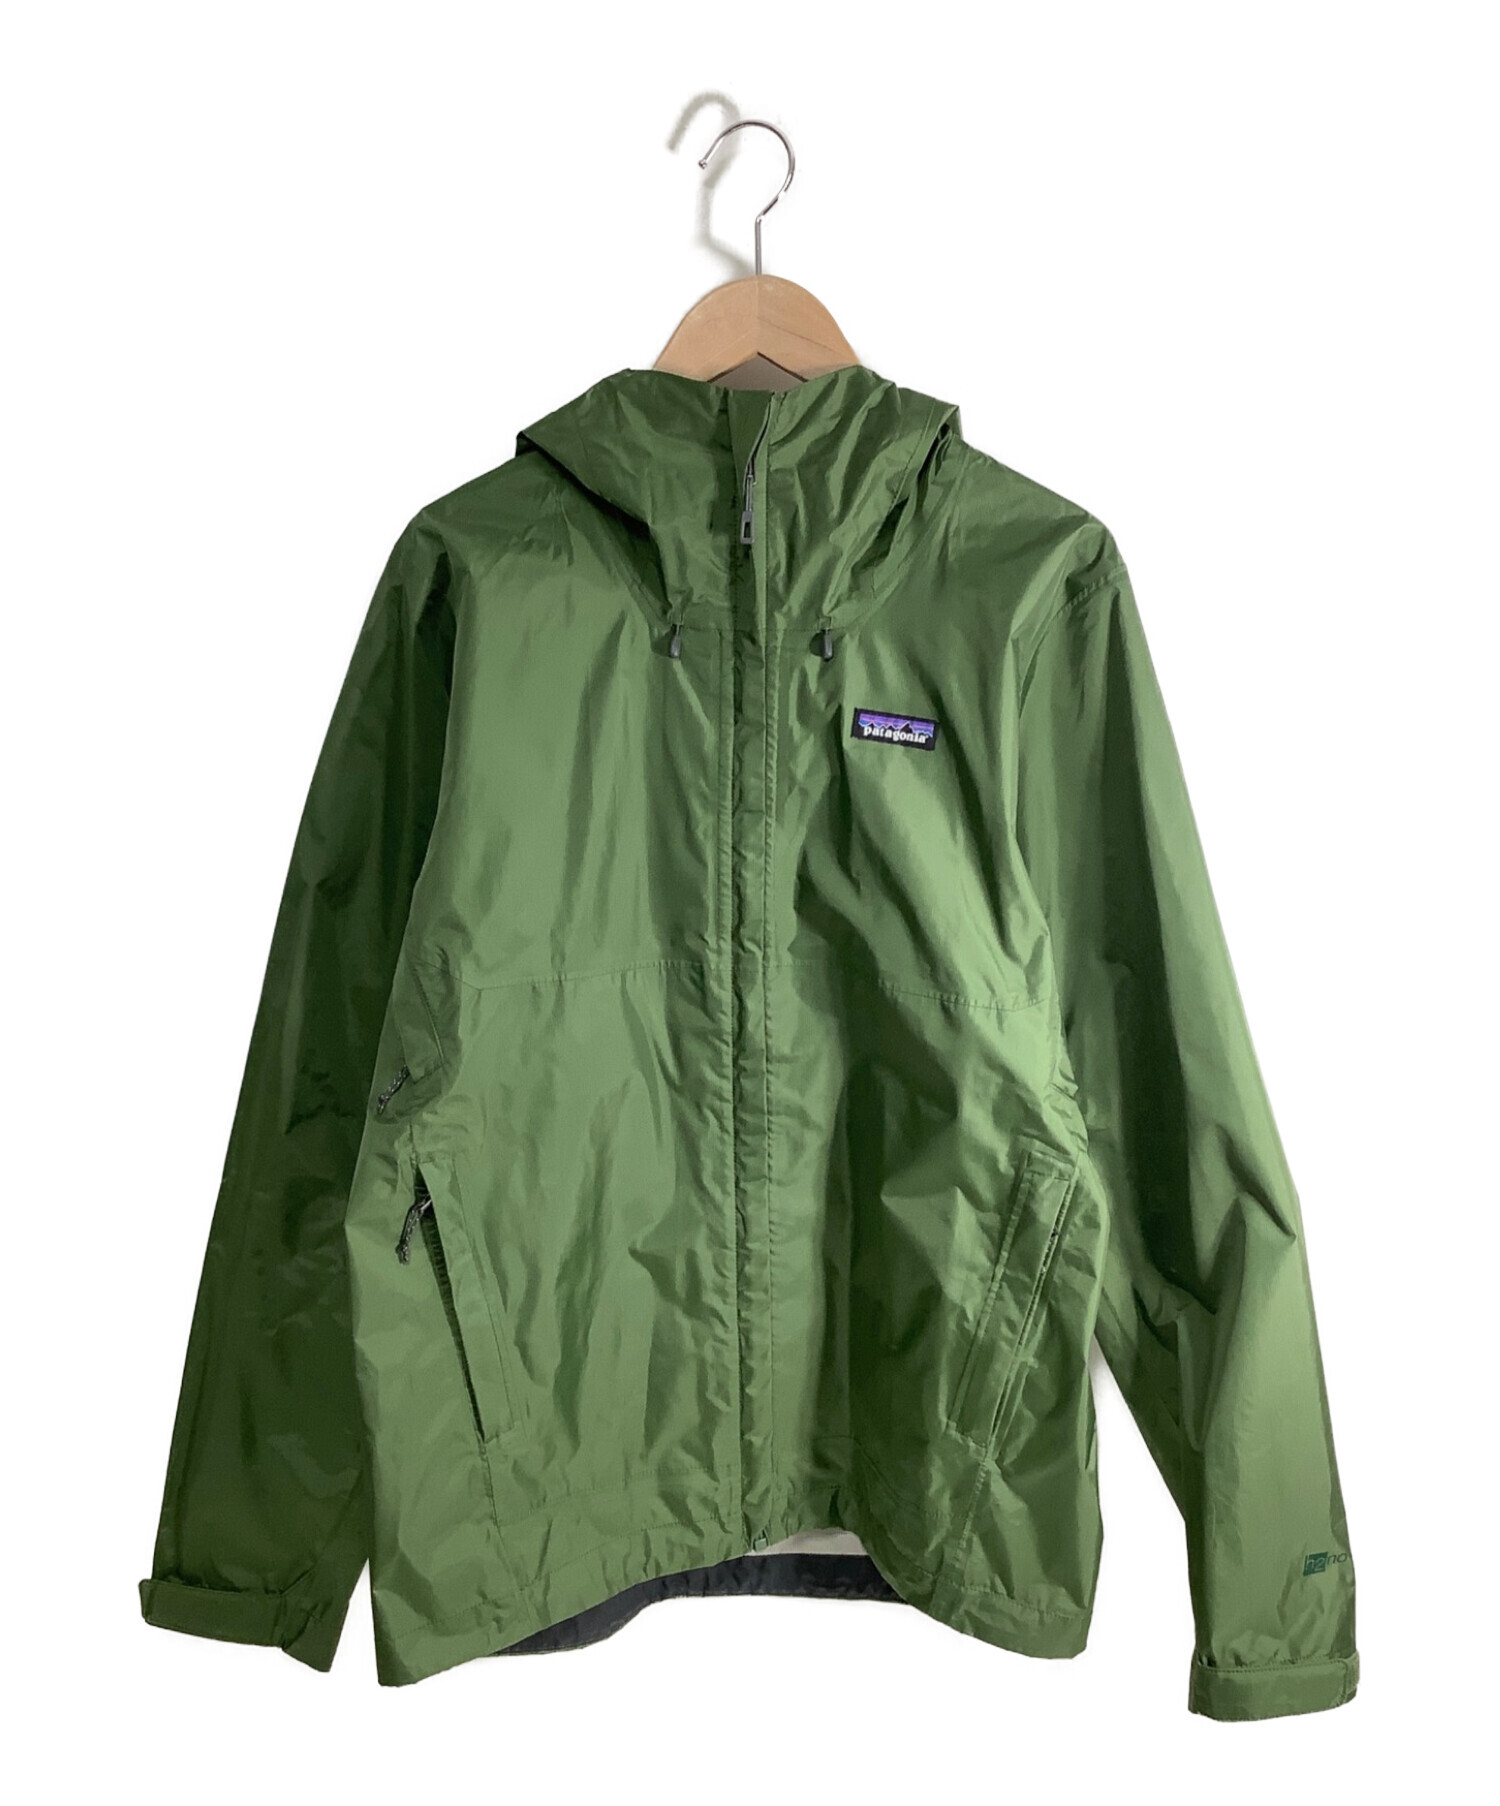 patagonia torrentshell jacket バッファローグリーン